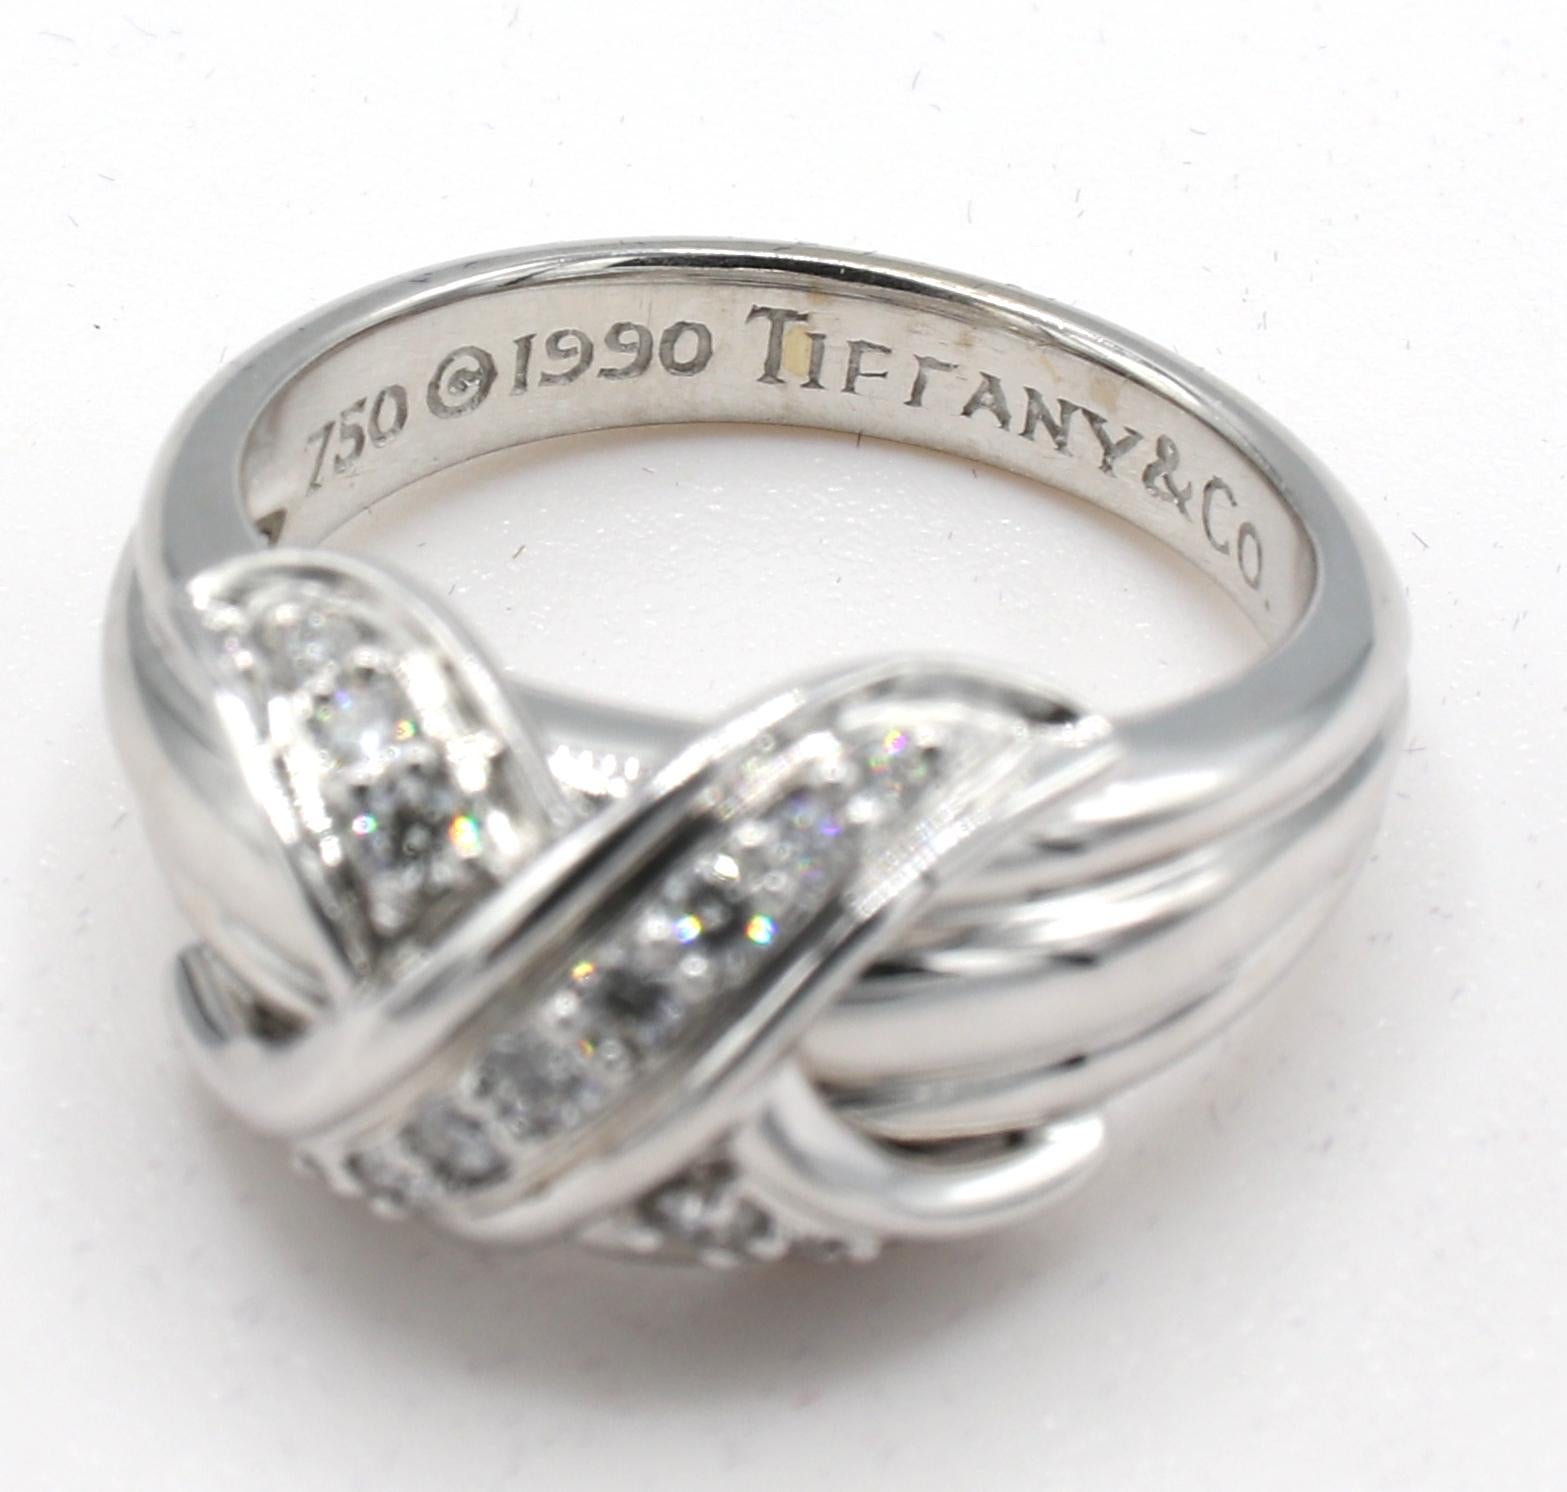 tiffany signature ring